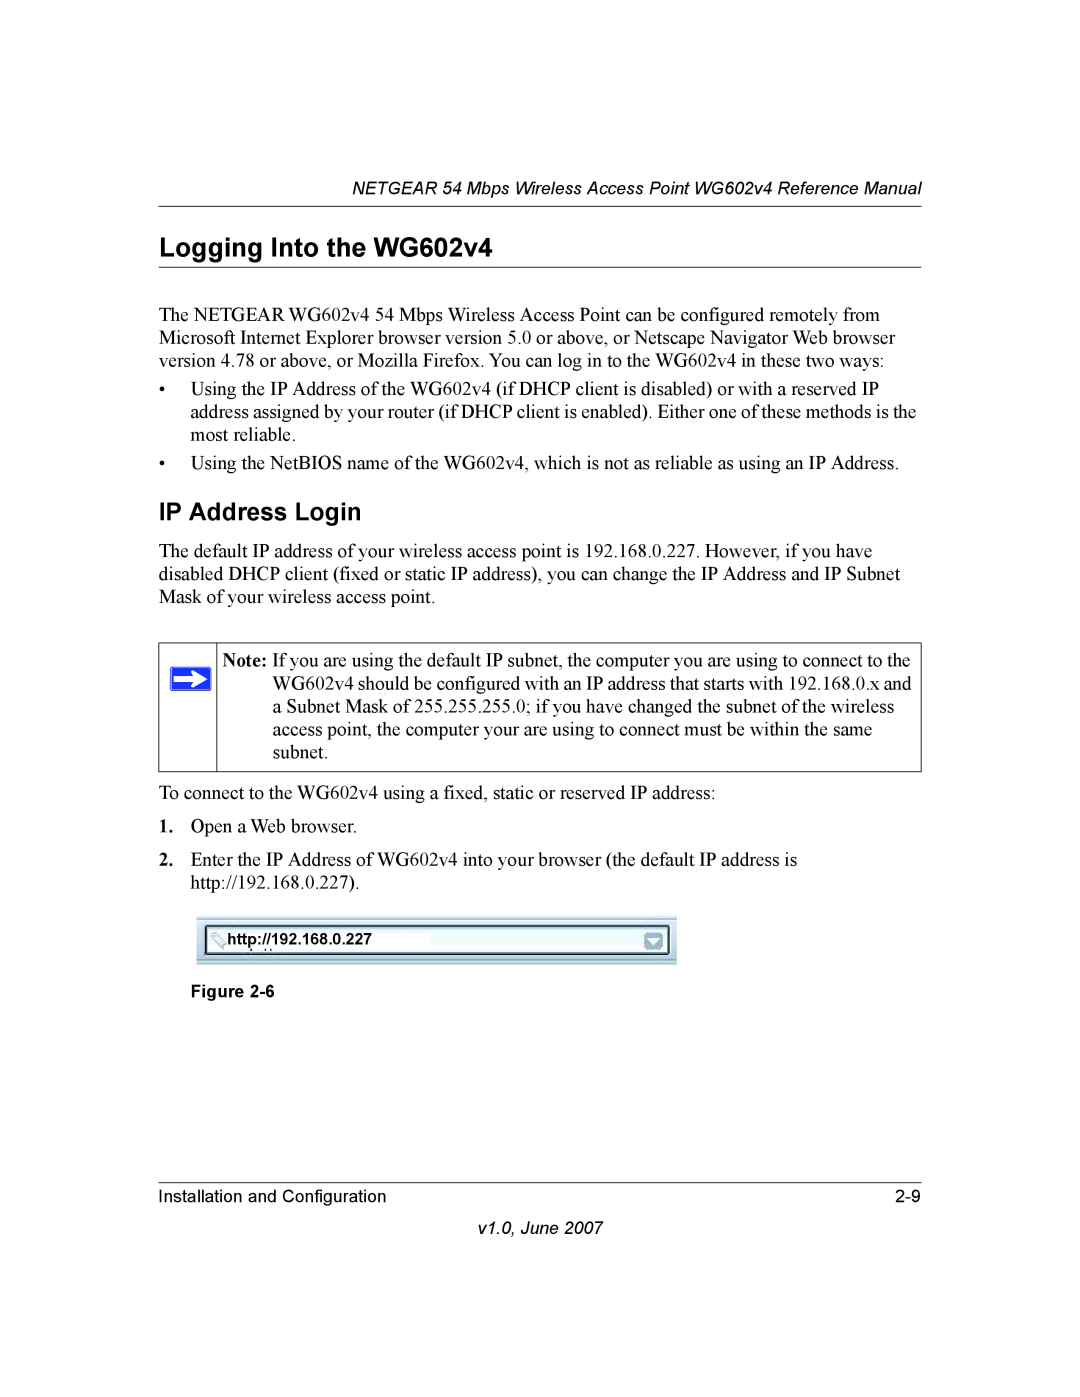 NETGEAR WG602V4 manual Logging Into the WG602v4, IP Address Login 